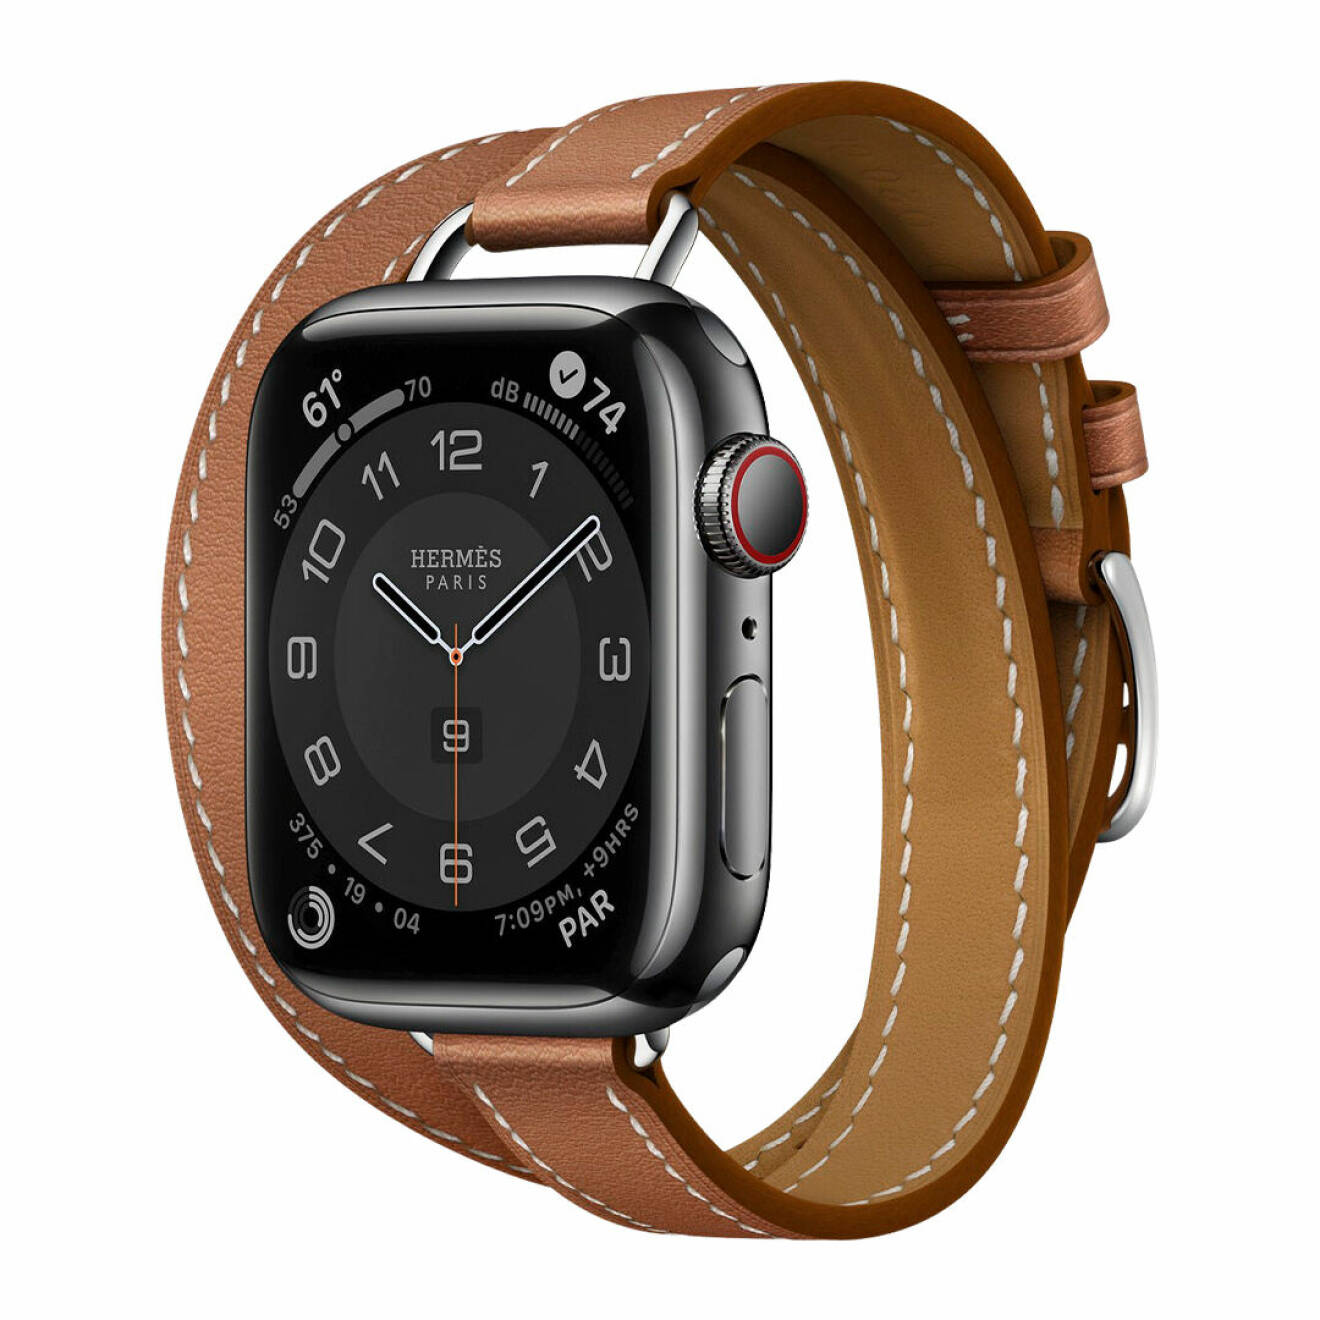 Klocka, 16 295  kr, Apple/Hermès.